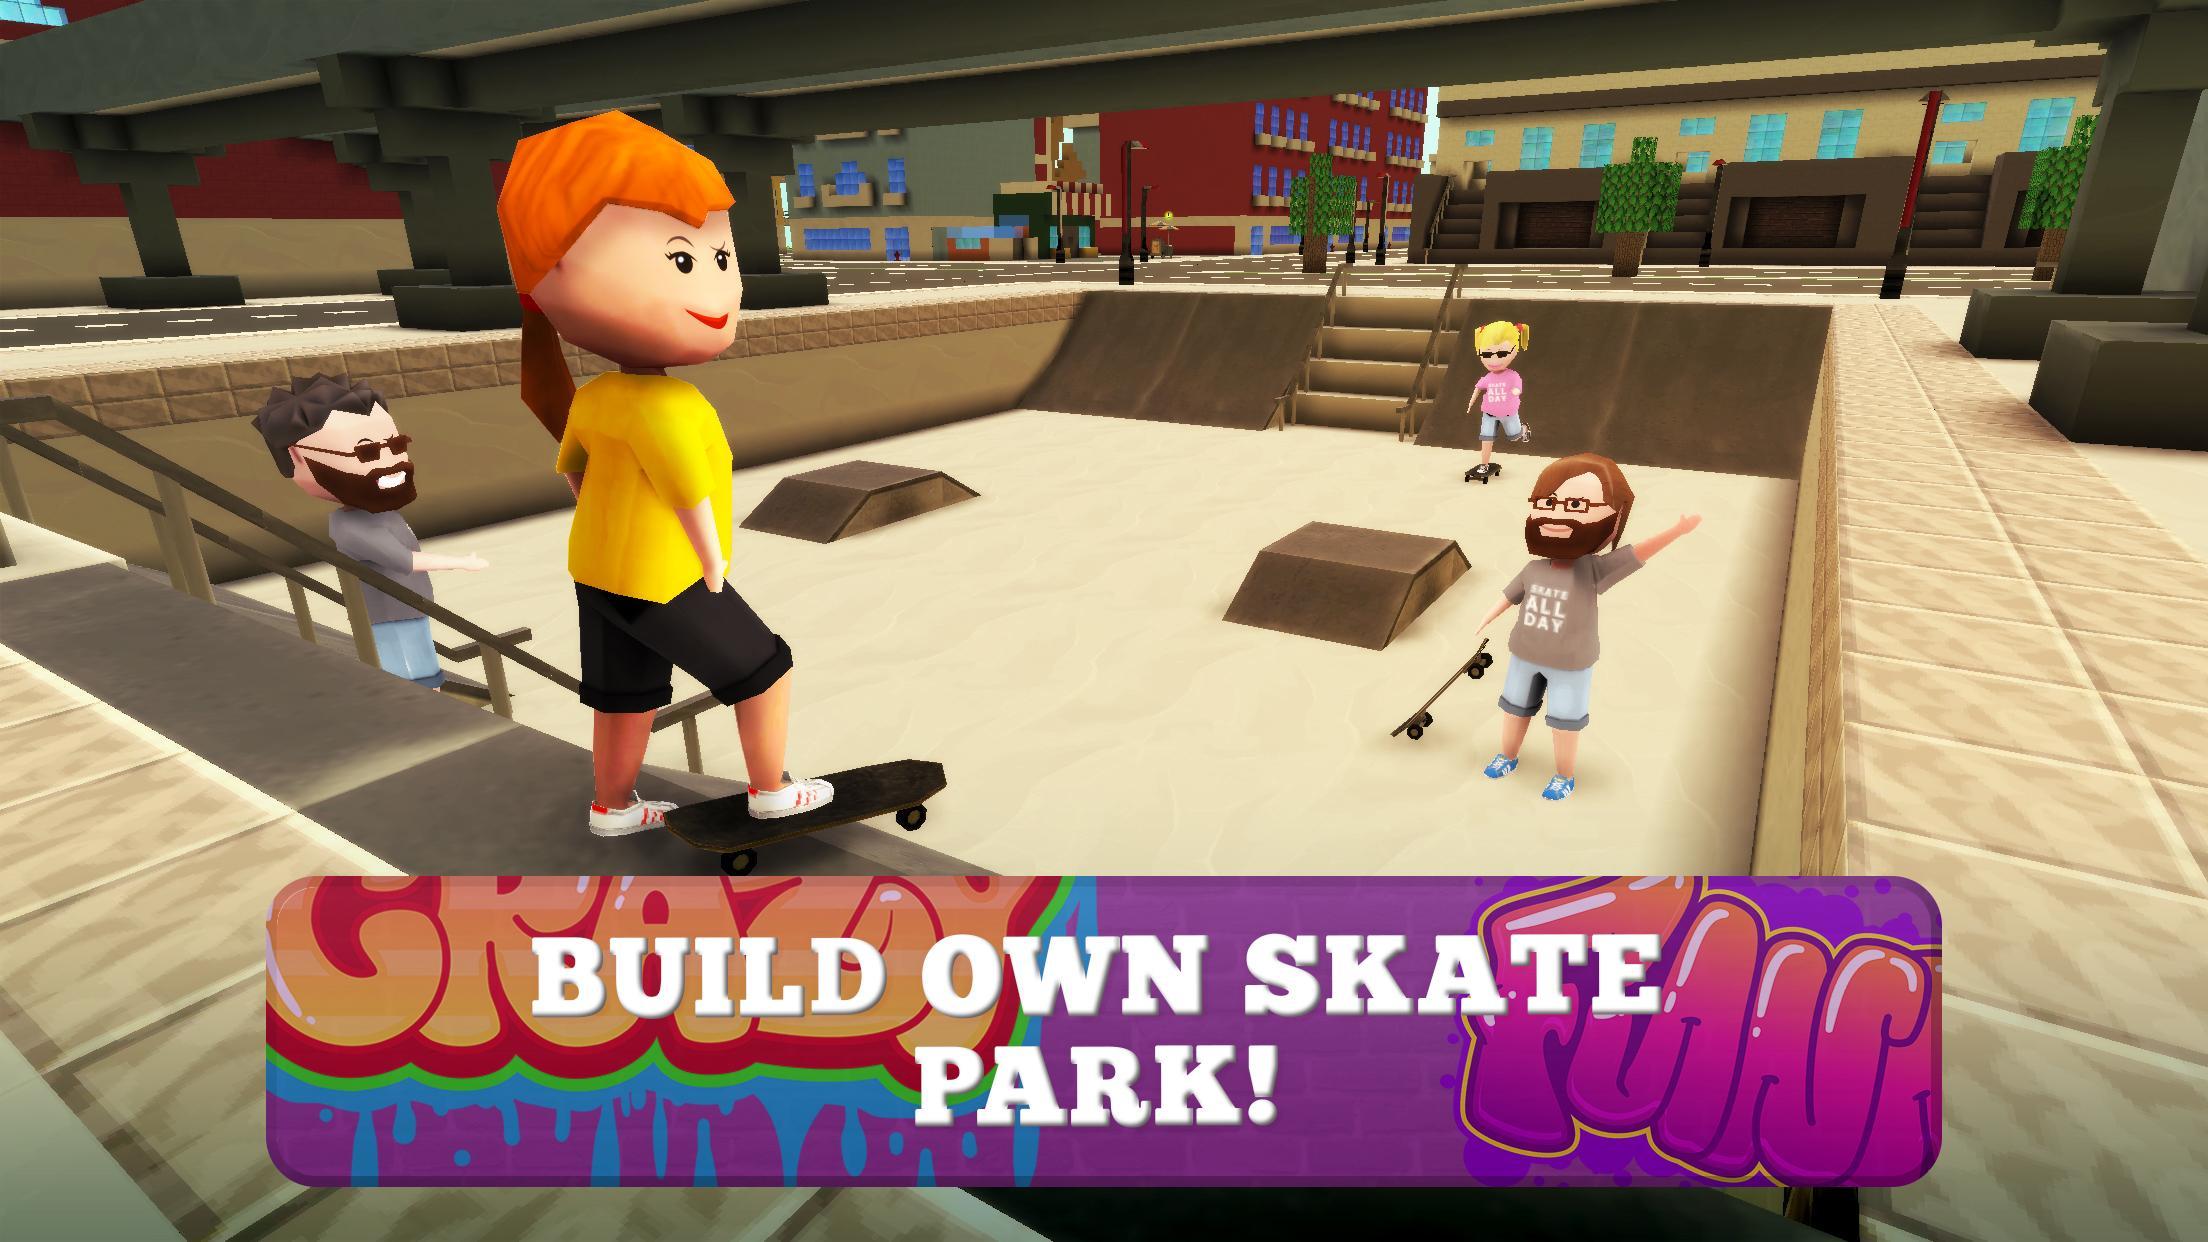 Screenshot 1 of Skate Craft: Profi-Skater in City-Skateboard-Spielen 